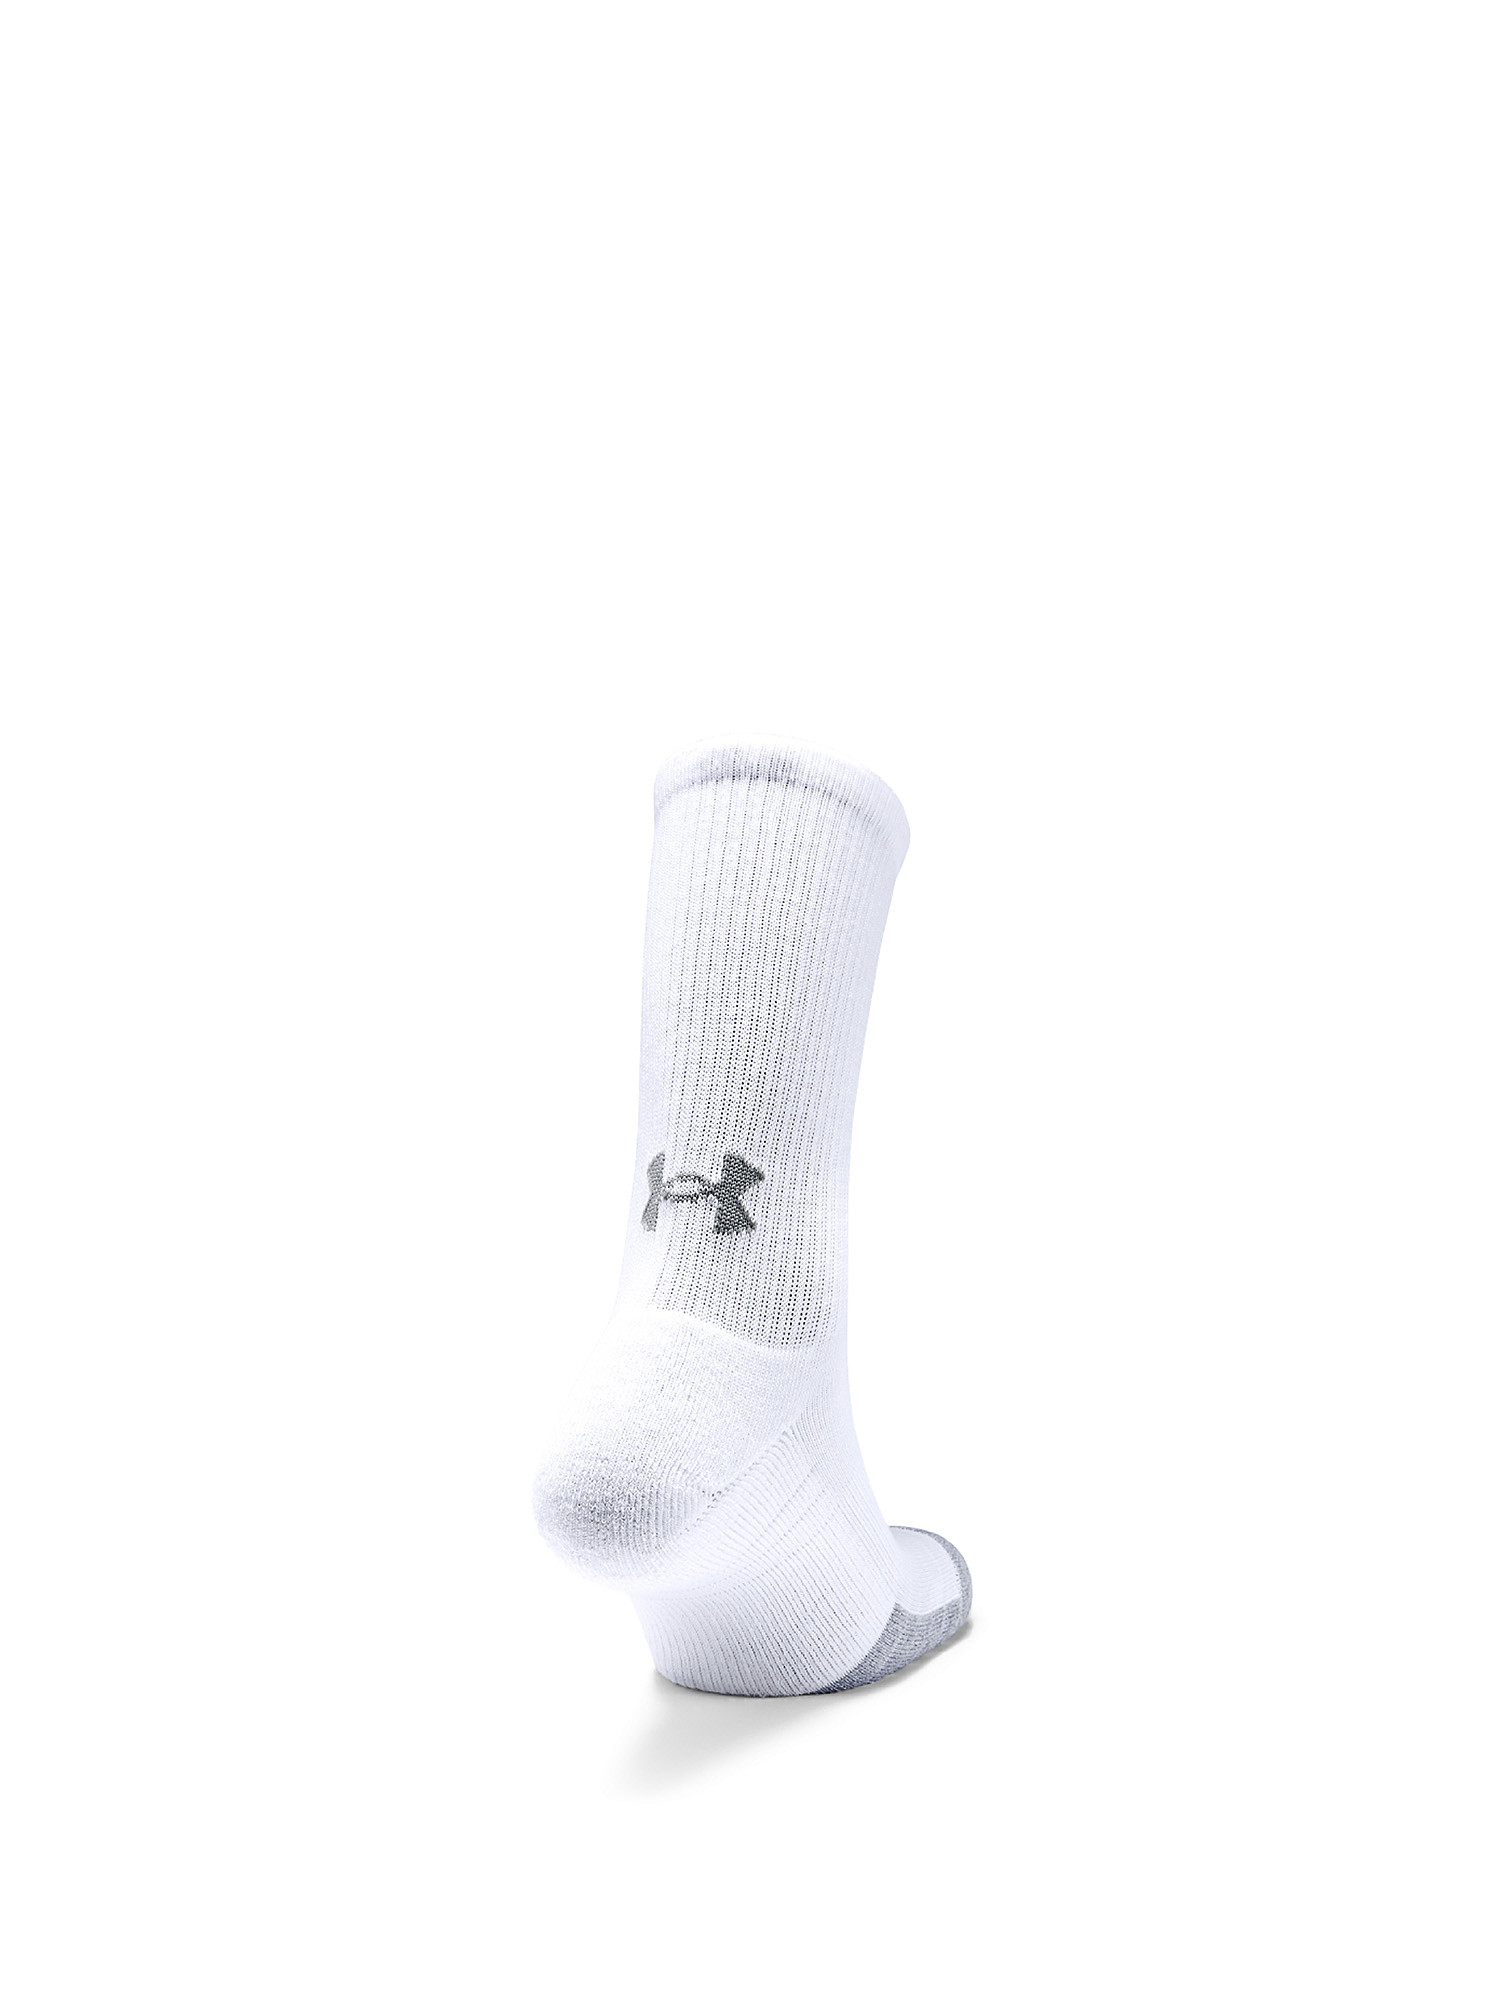 Under Armour - HeatGear® Crew socks, White, large image number 2